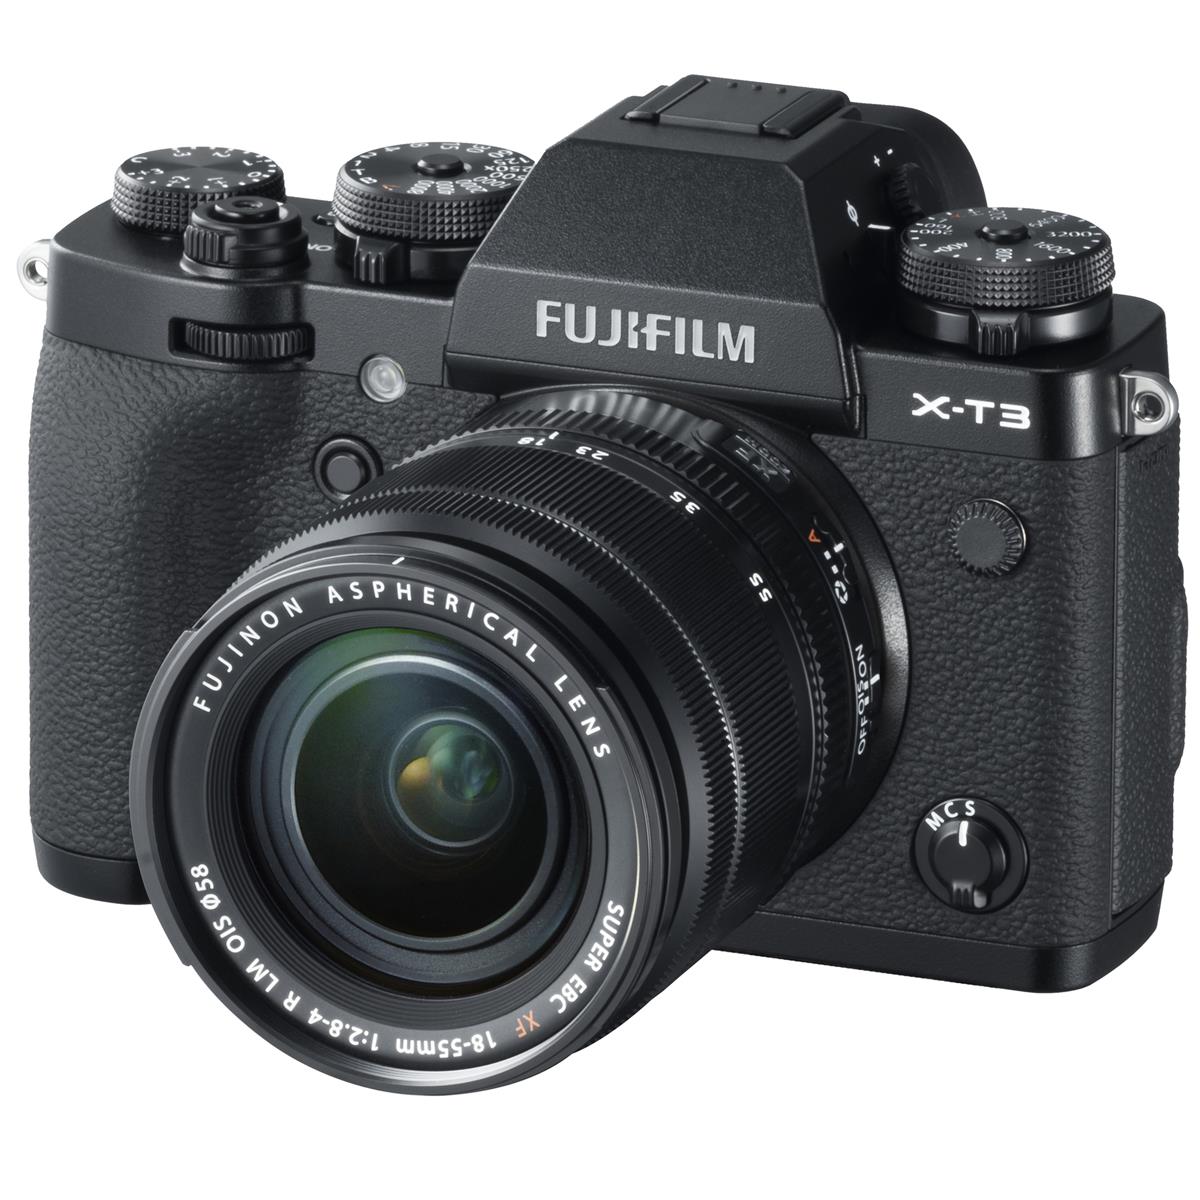 Fujifilm X-T3 WW Mirrorless Camera Body, with XF 18-55mm Lens Kit (Black)